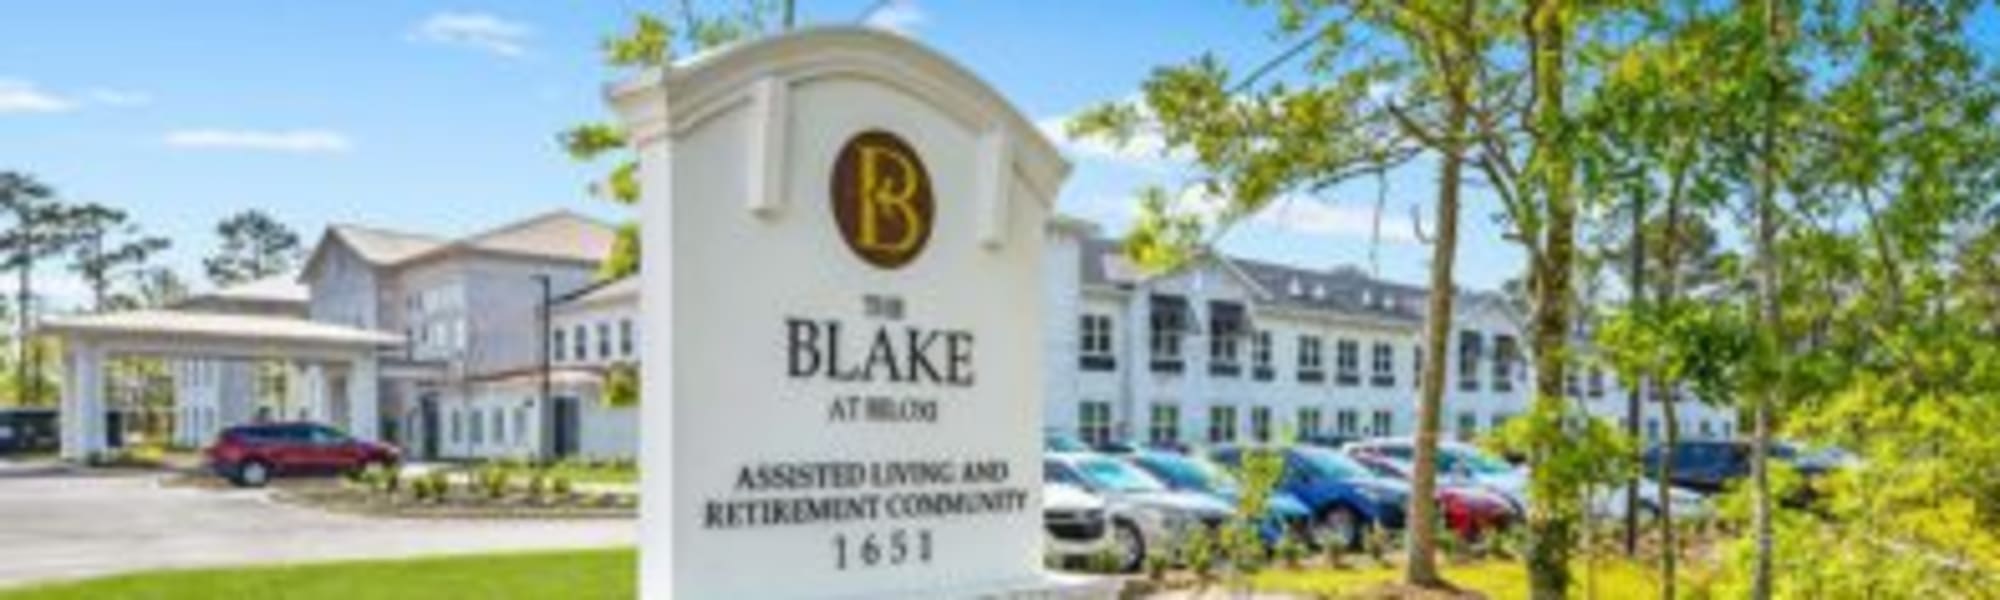 The Blake at LPGA building in Daytona Beach, Florida